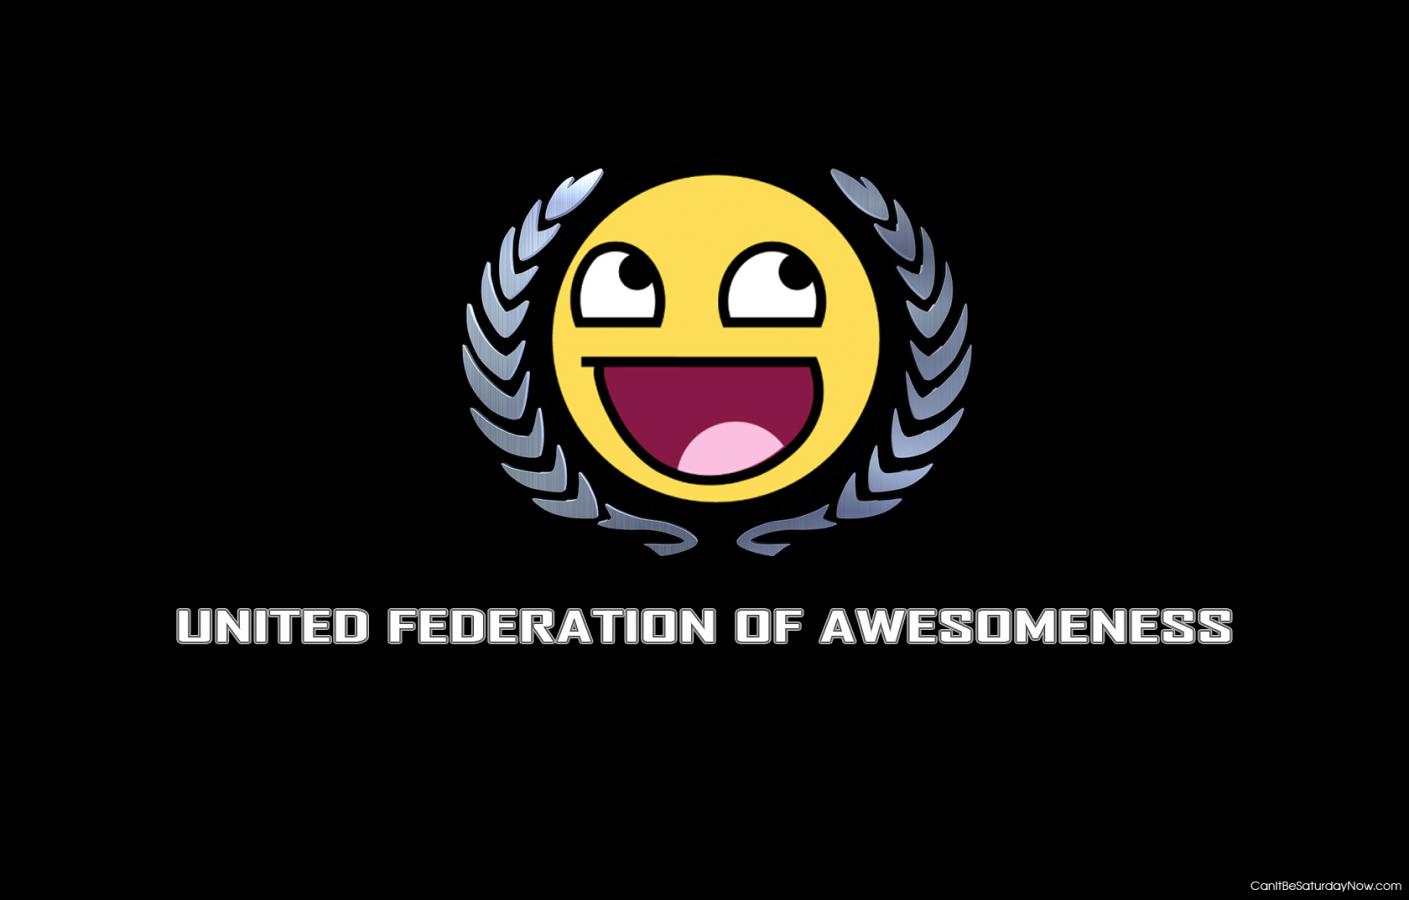 UFA - It has awesomeness